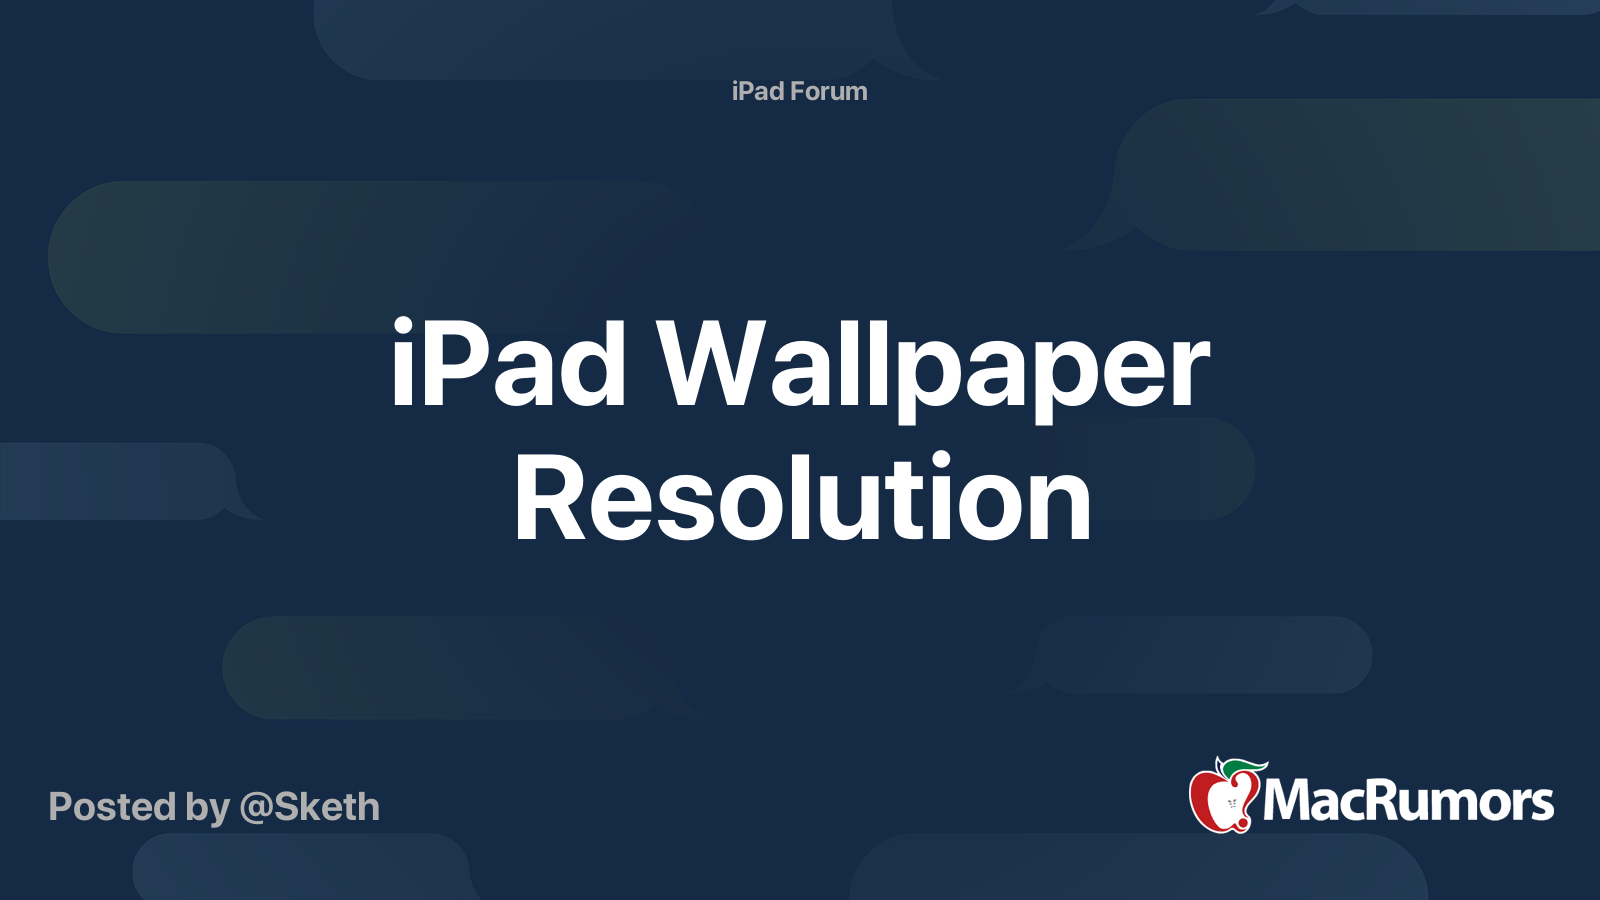 ipad 2 wallpaper resolution